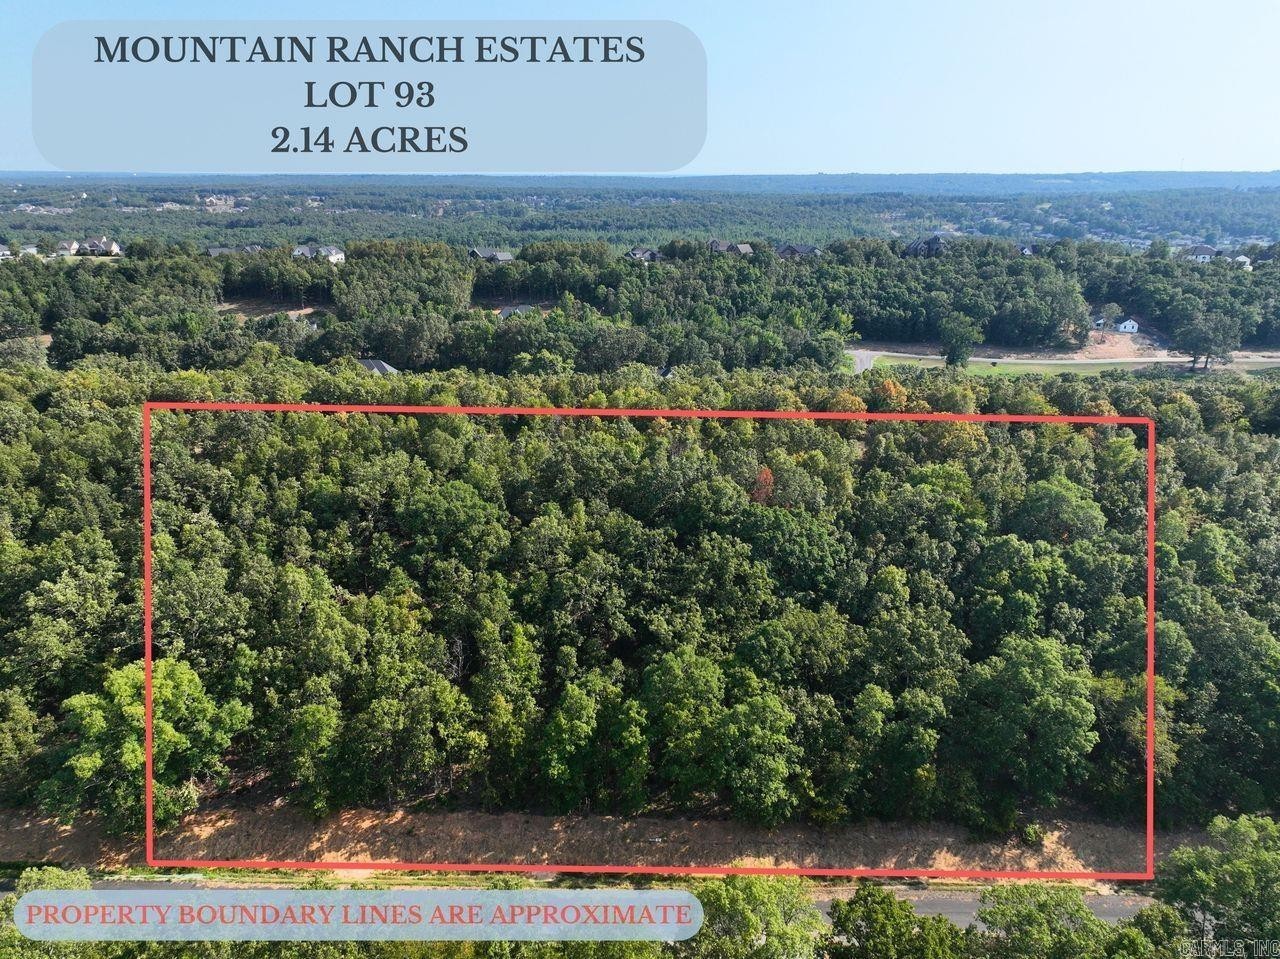 1. Lot 93 Mountain Ranch Estates